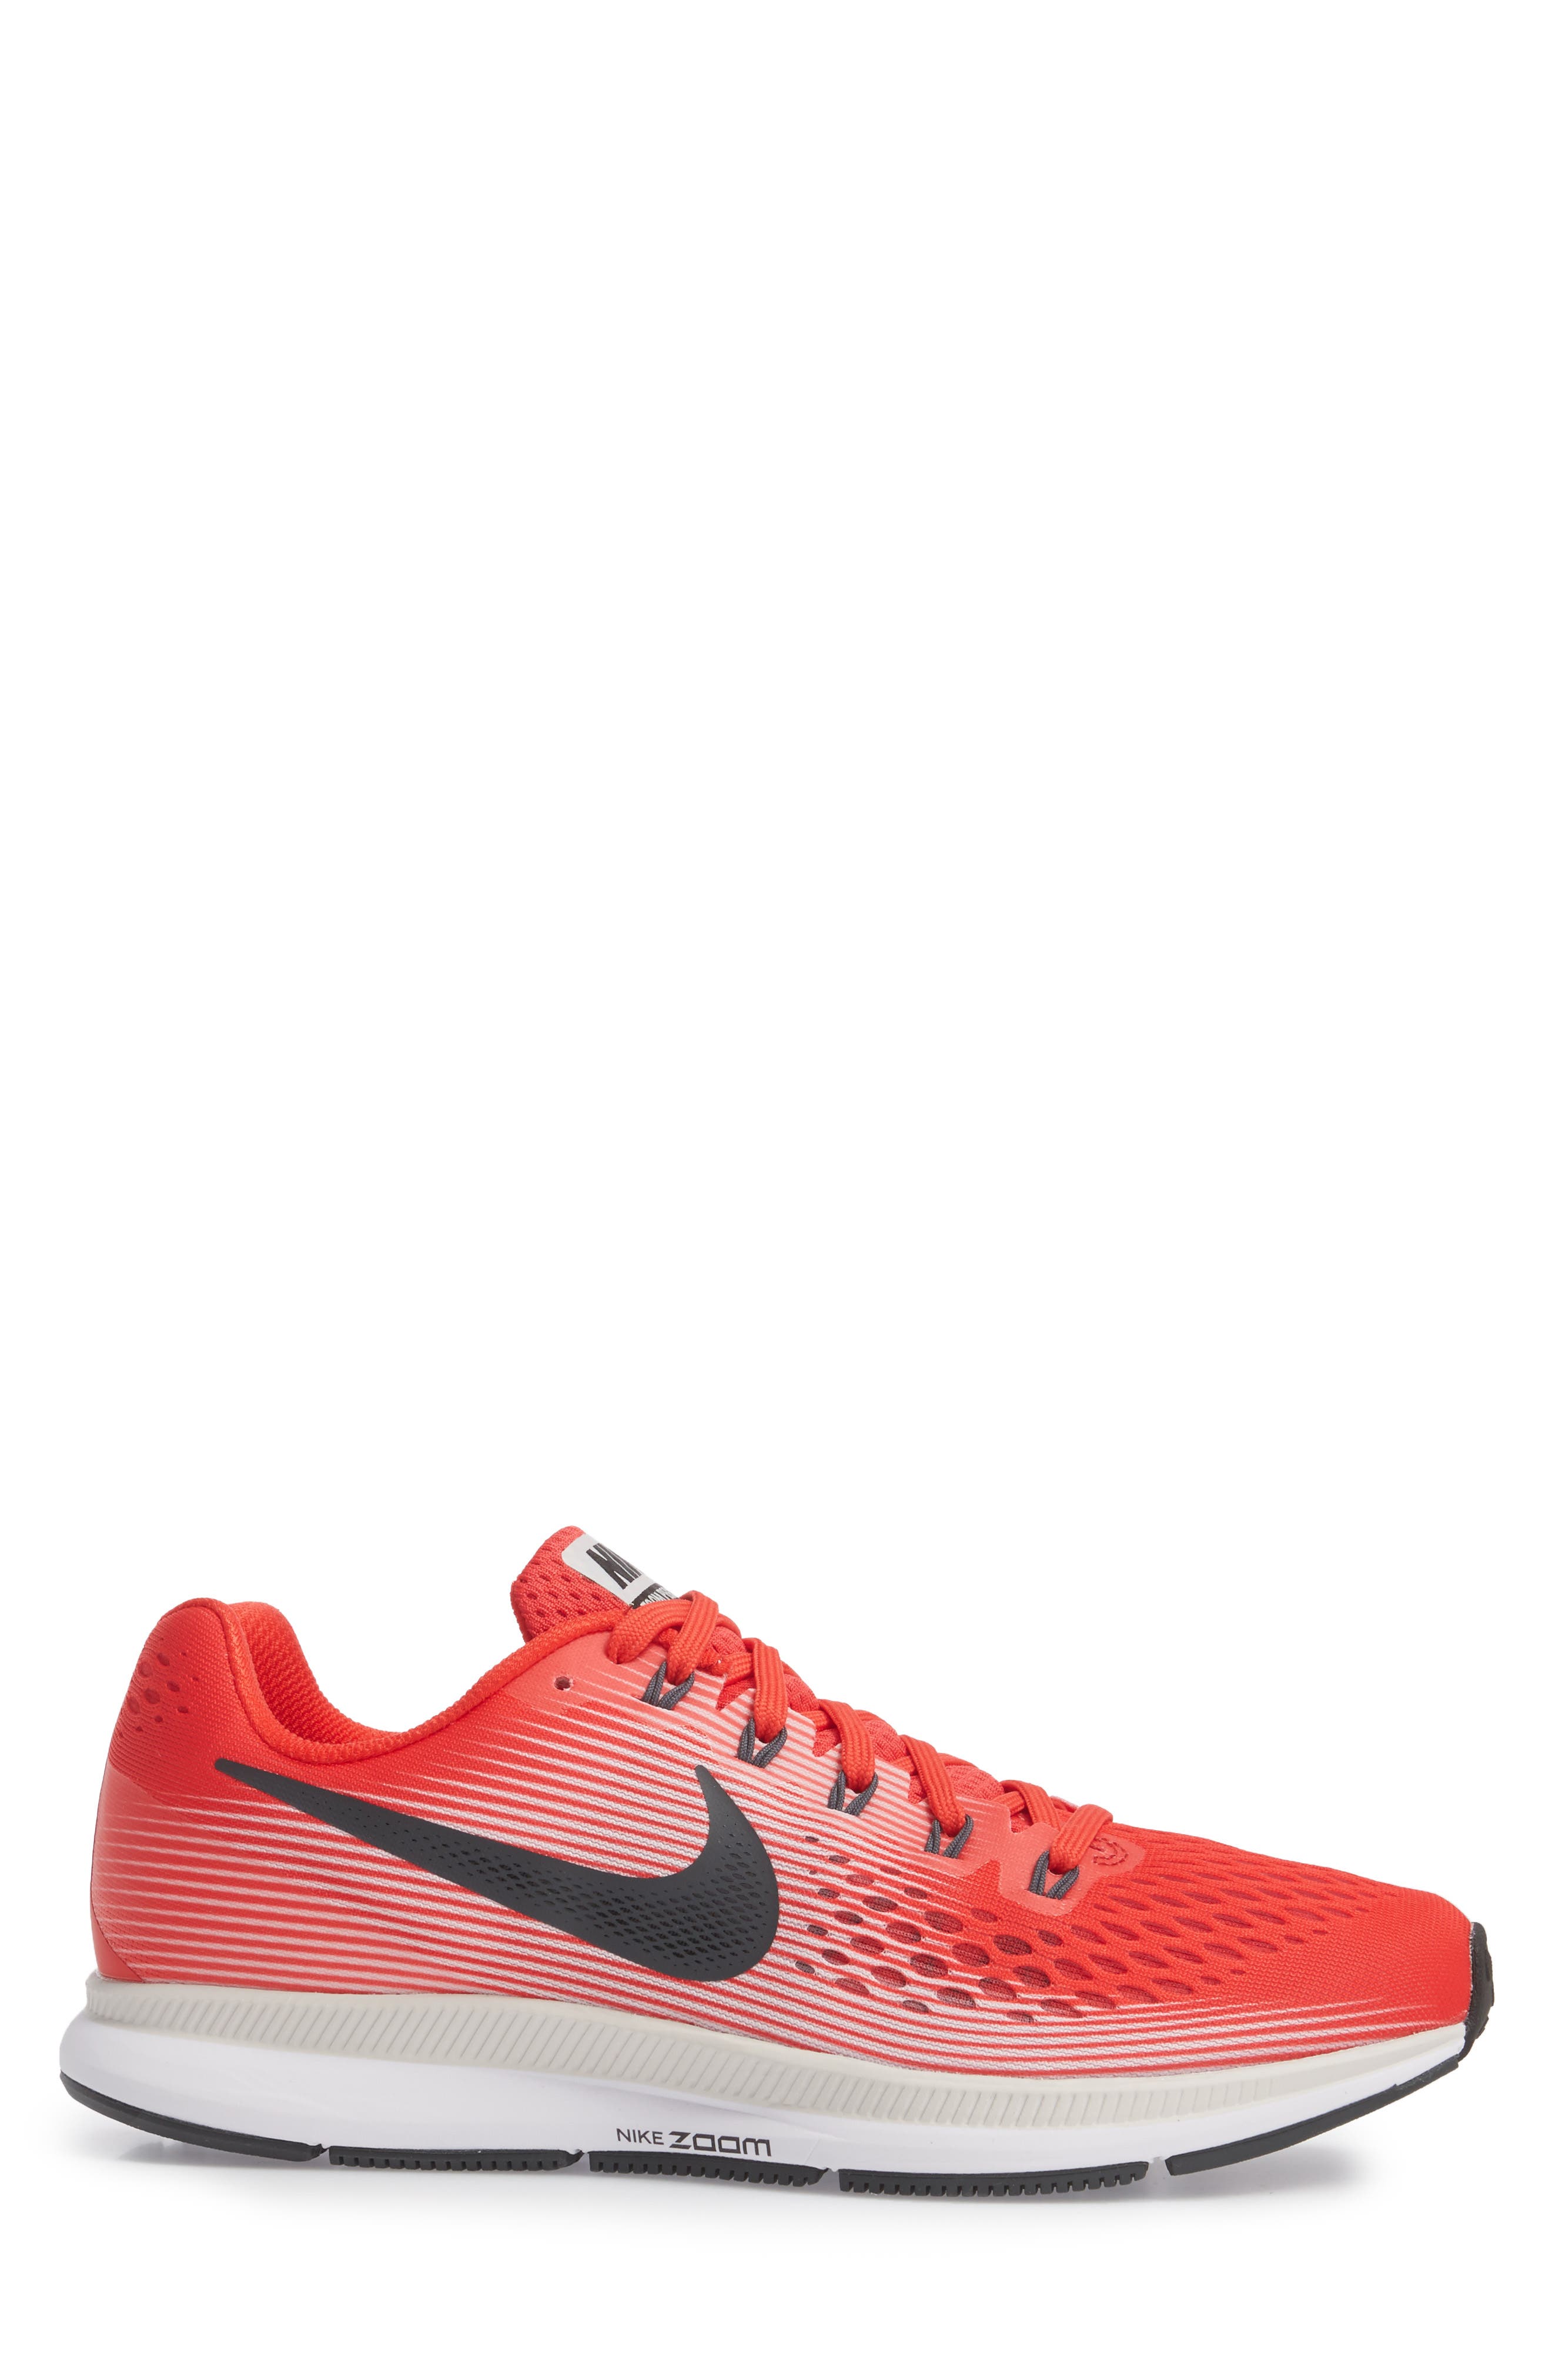 Nike | Air Zoom Pegasus 34 Running 